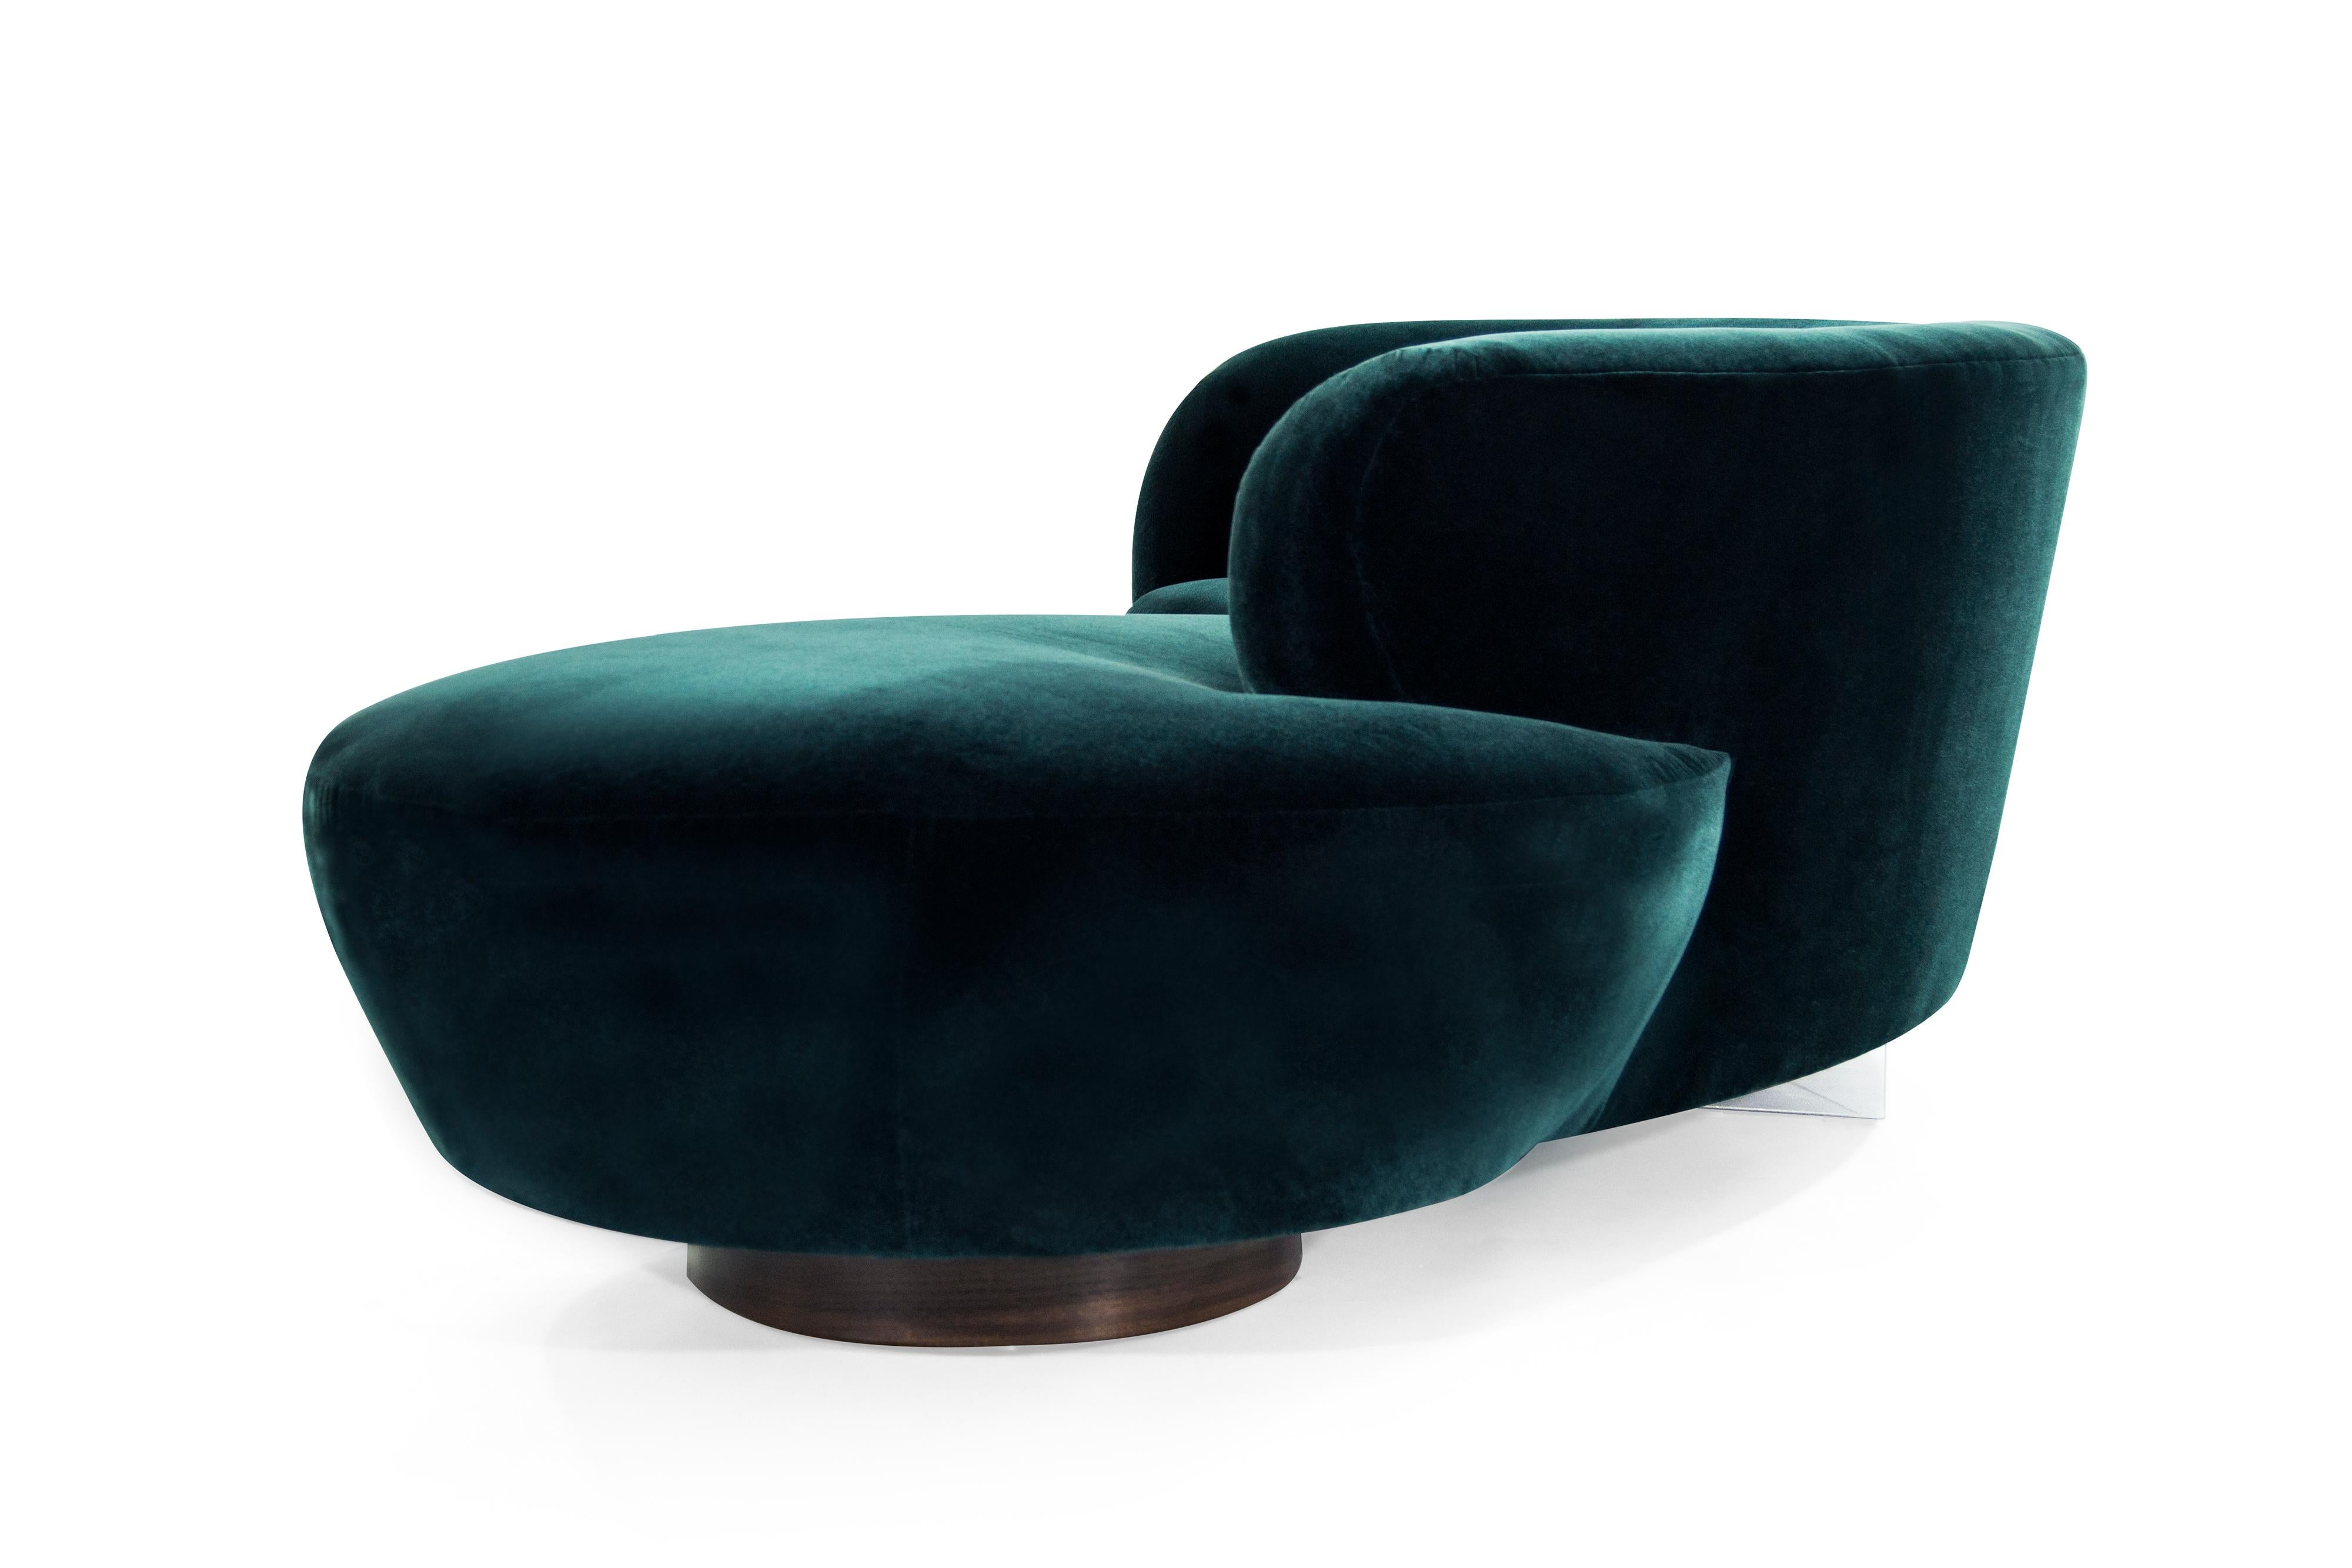 Mid-Century Modern Curved Sofa in Teal Velvet by Vladimir Kagan